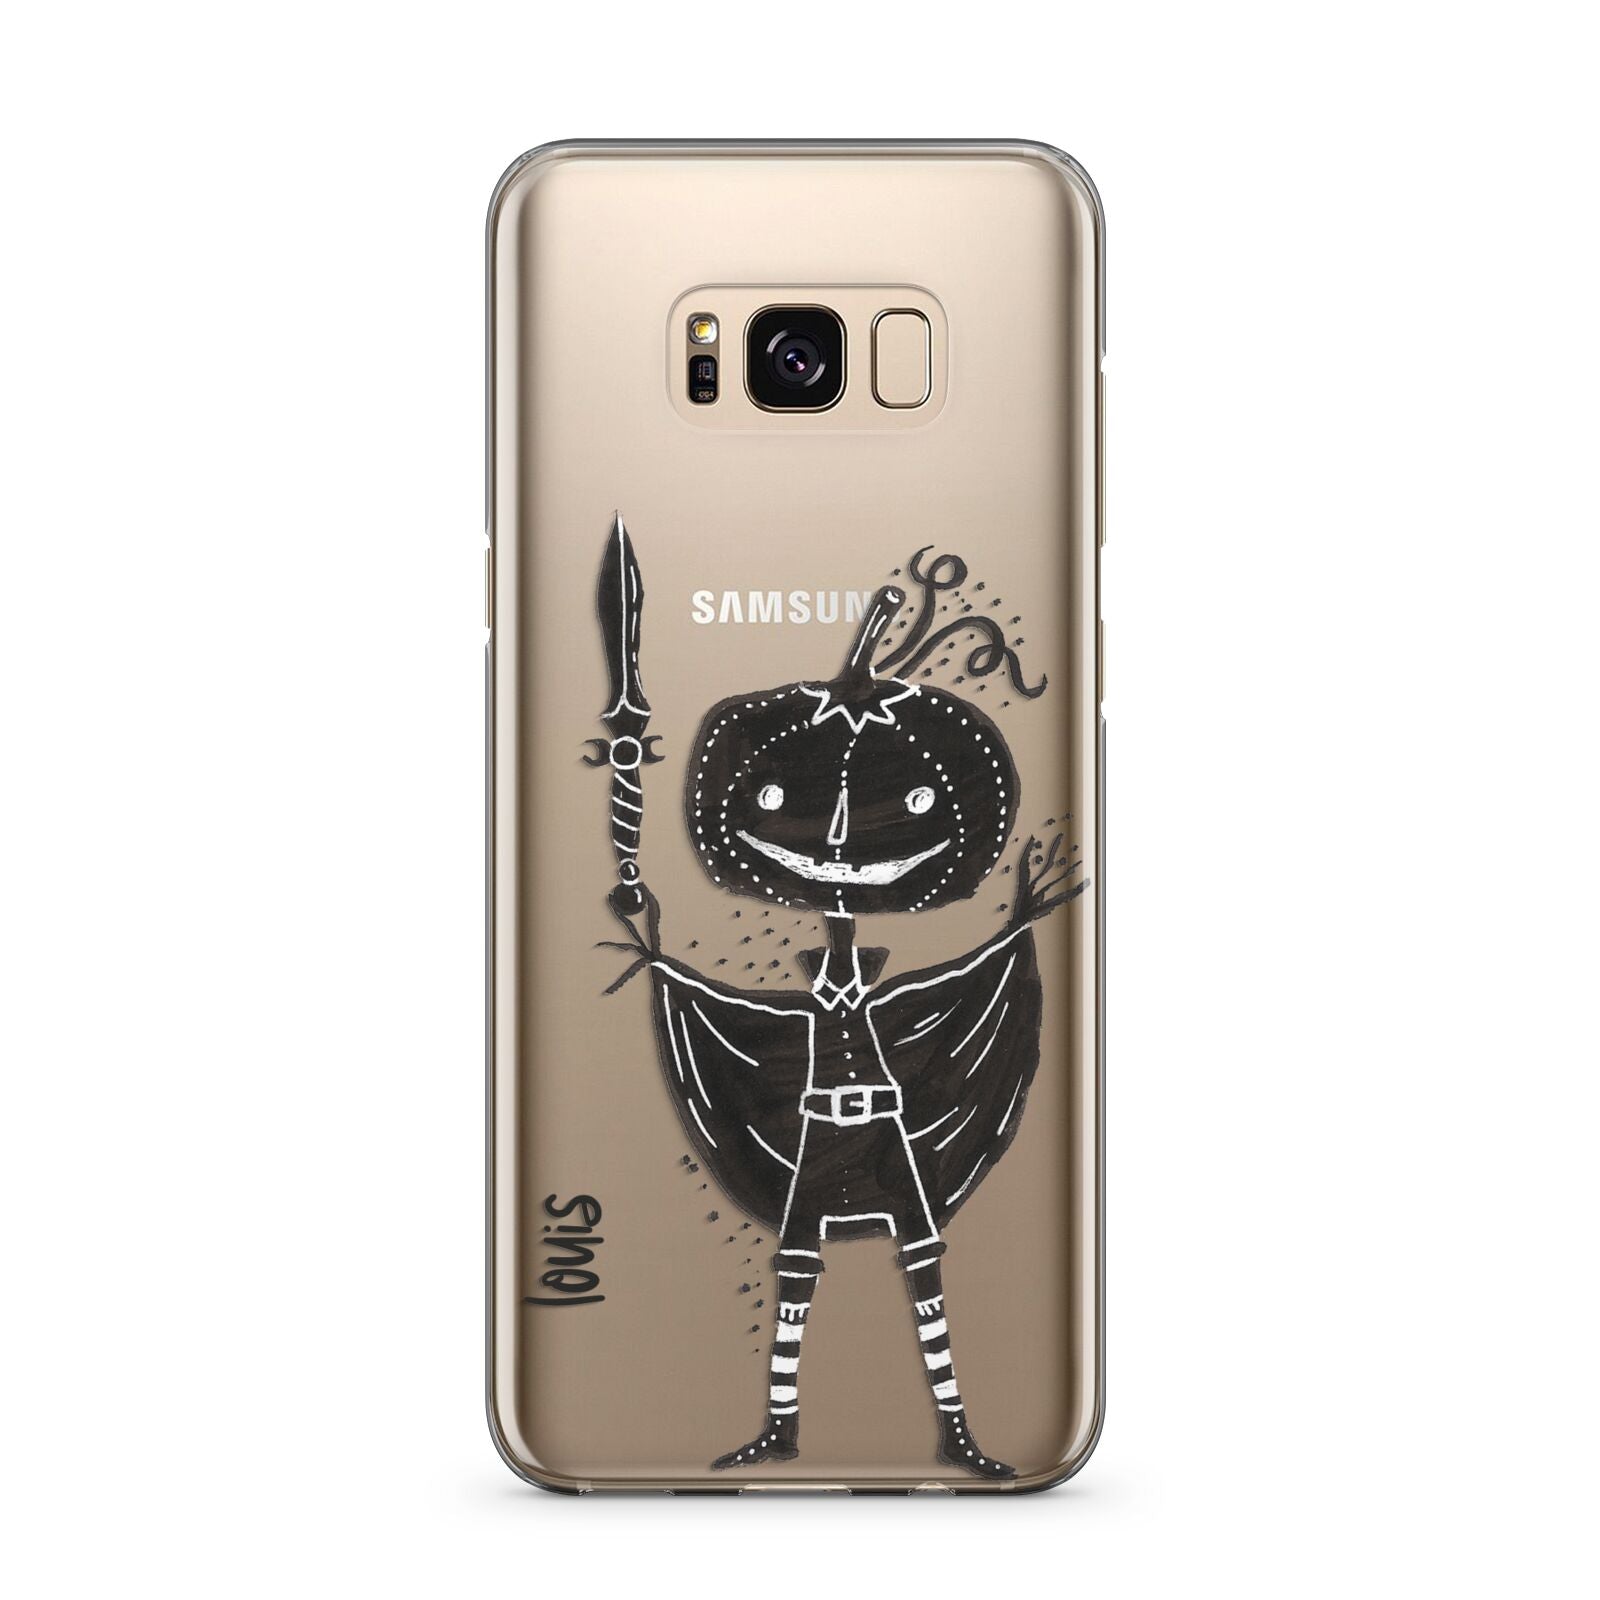 Pumpkin Head Personalised Samsung Galaxy S8 Plus Case